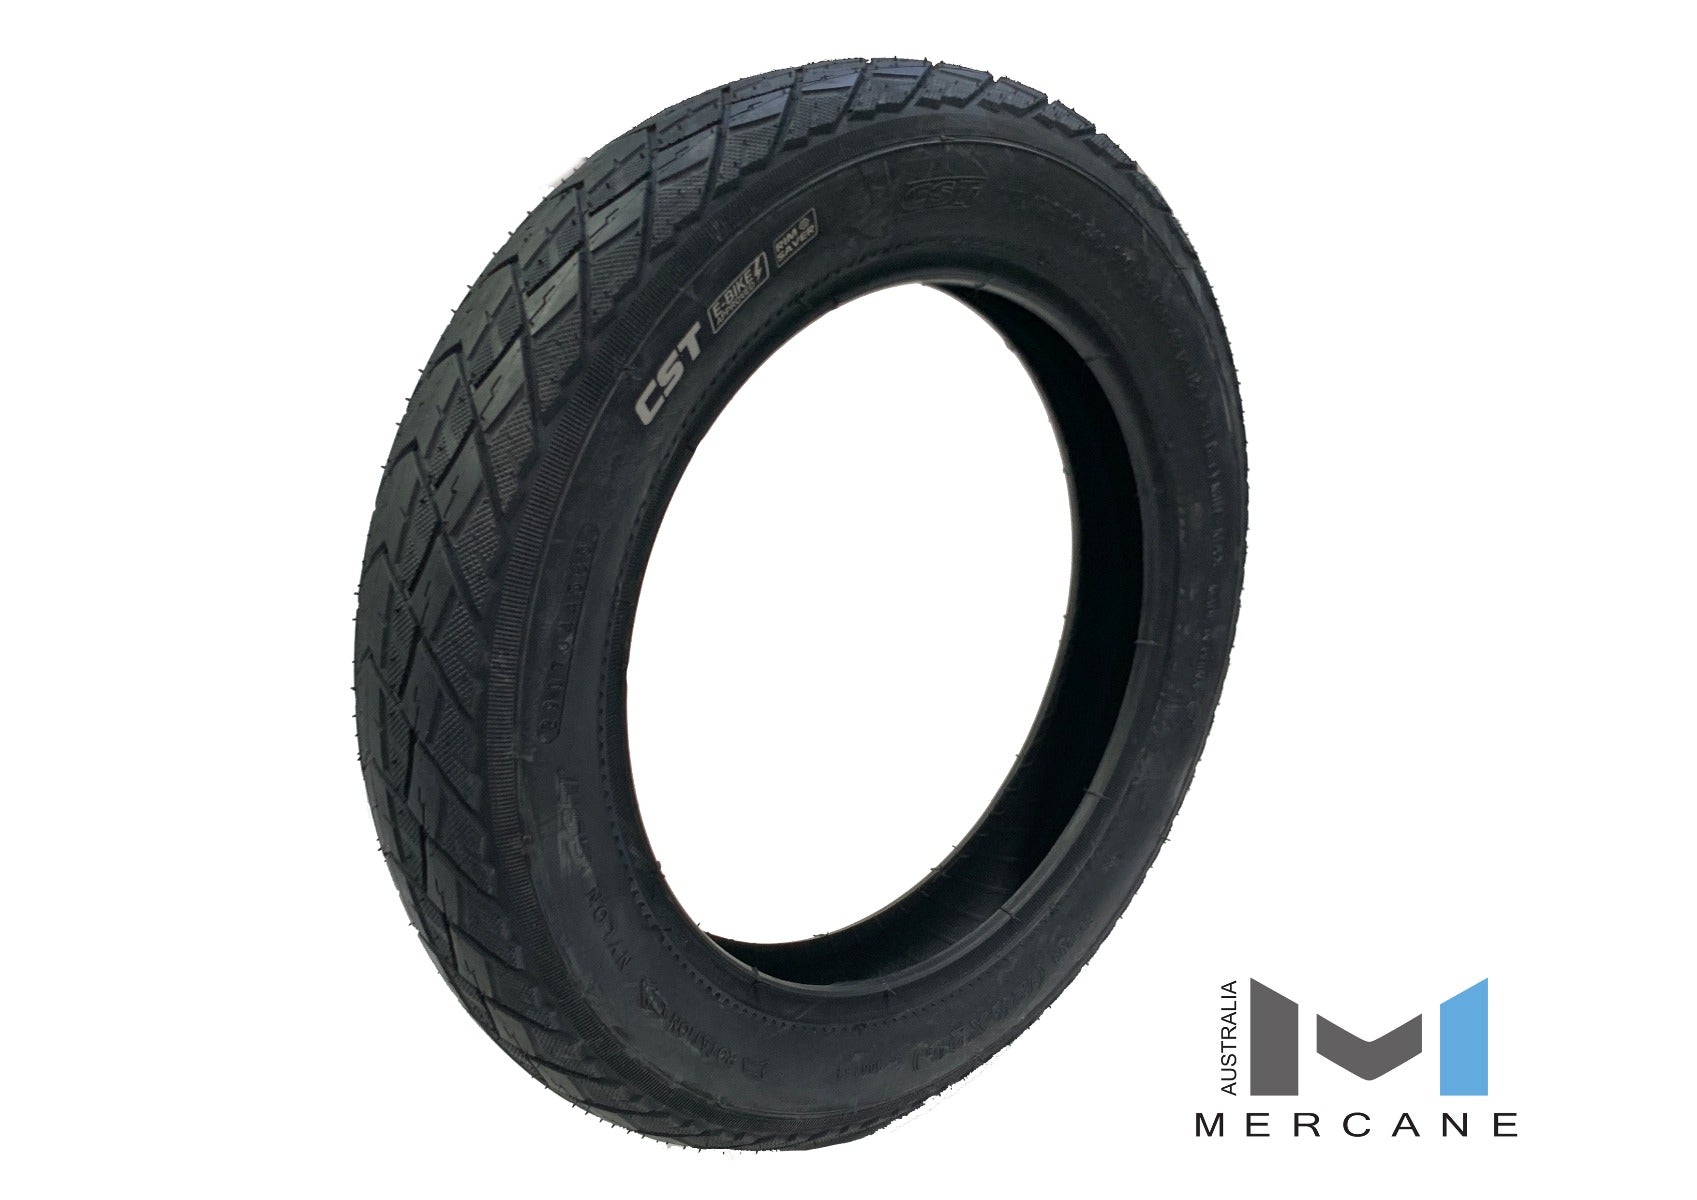 Mercane | Jubel | 12 x 2 Tyre (Tube sold separately)